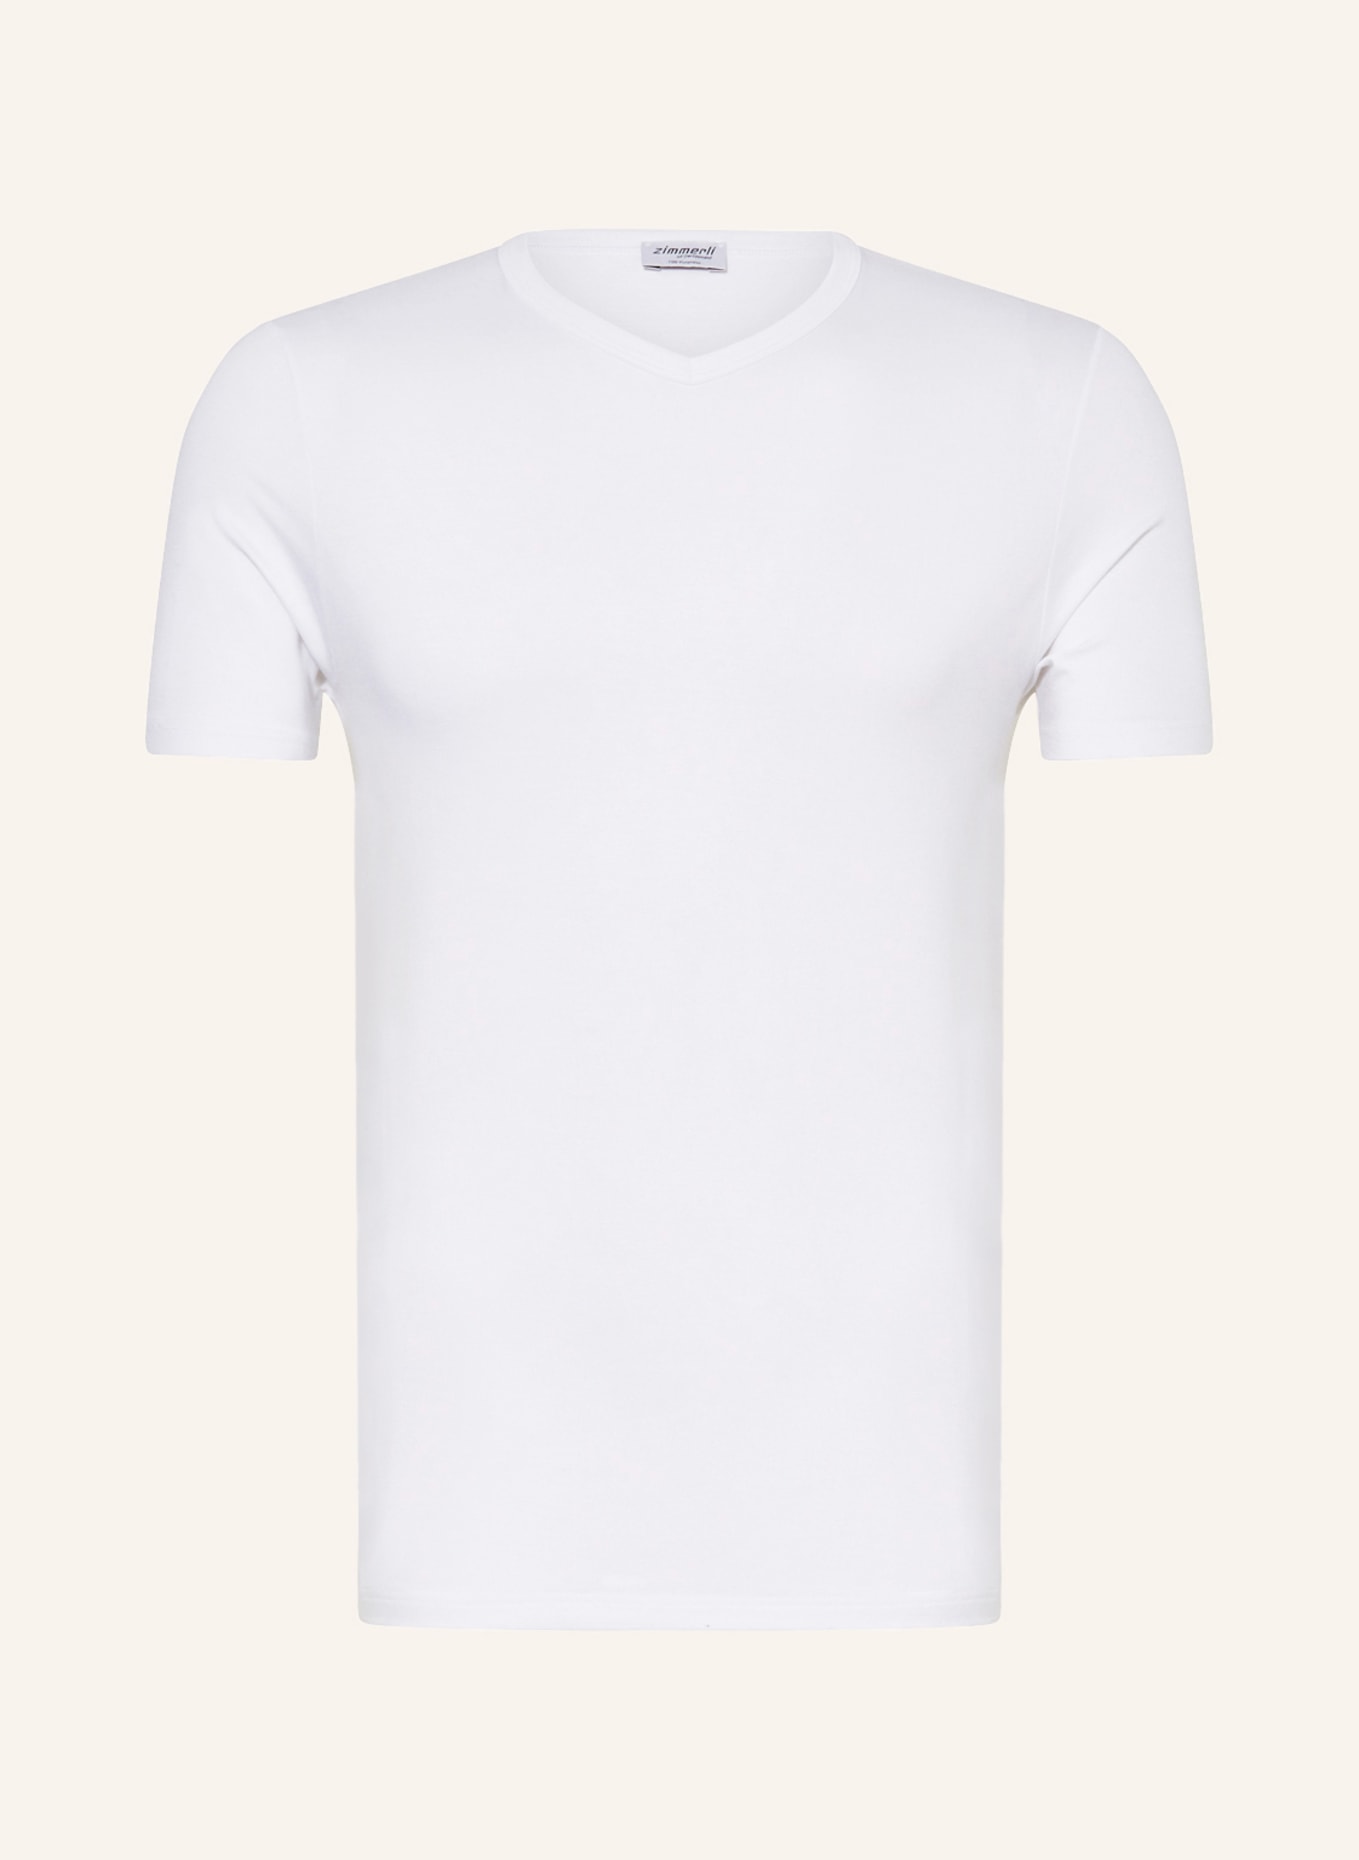 zimmerli T-Shirt PURENESS, Farbe: WEISS (Bild 1)